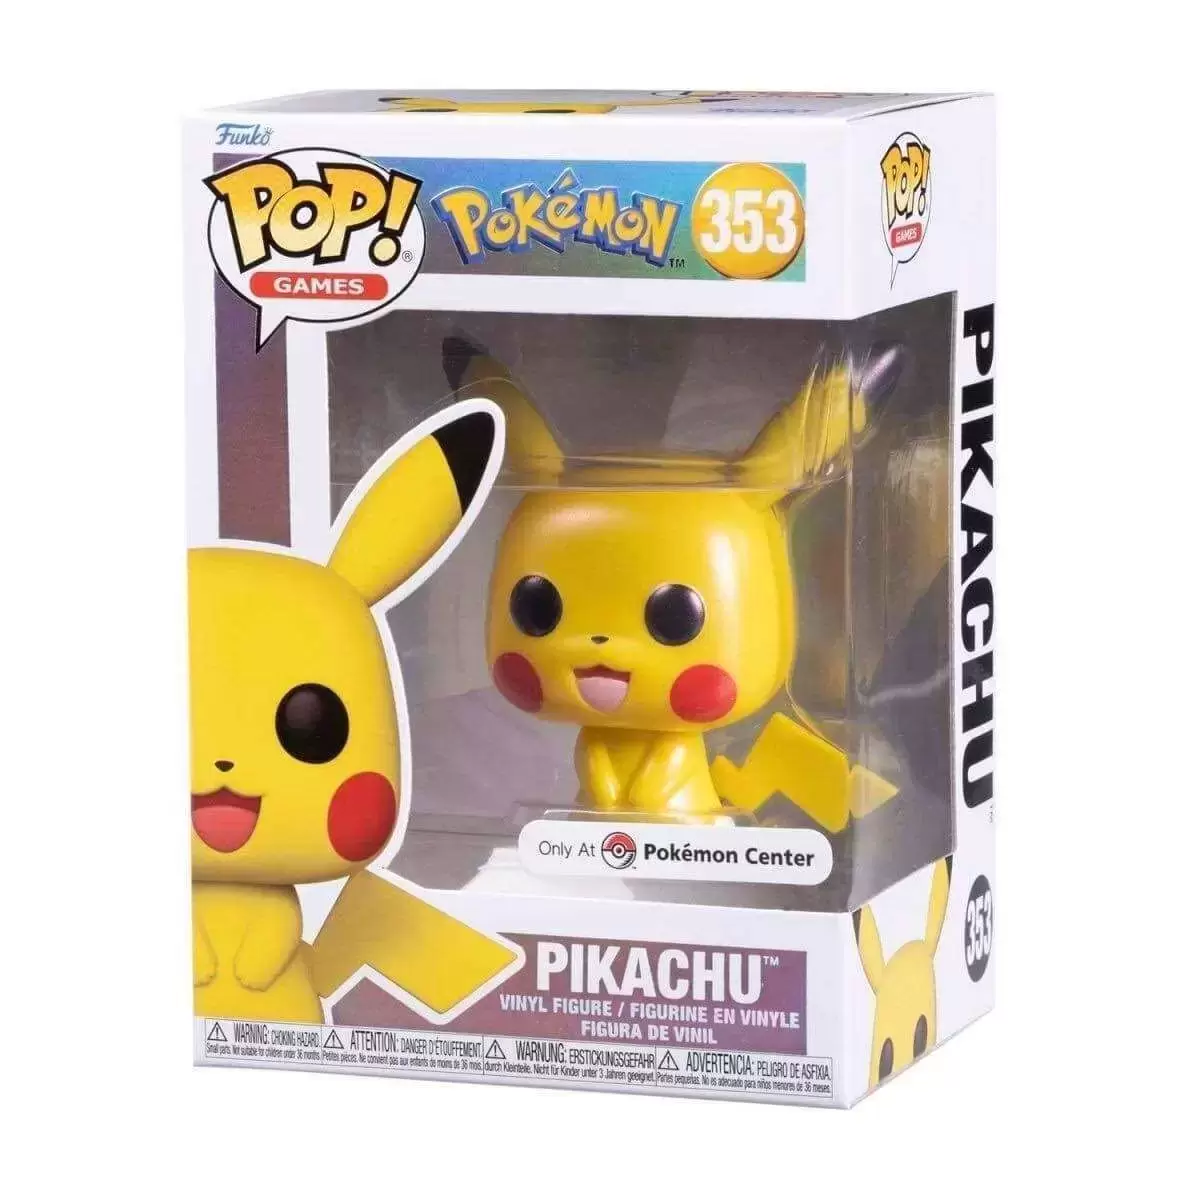 https://www.coleka.com/media/item/202303/13/pop-games-copy-pokemon-pikachu-353.webp